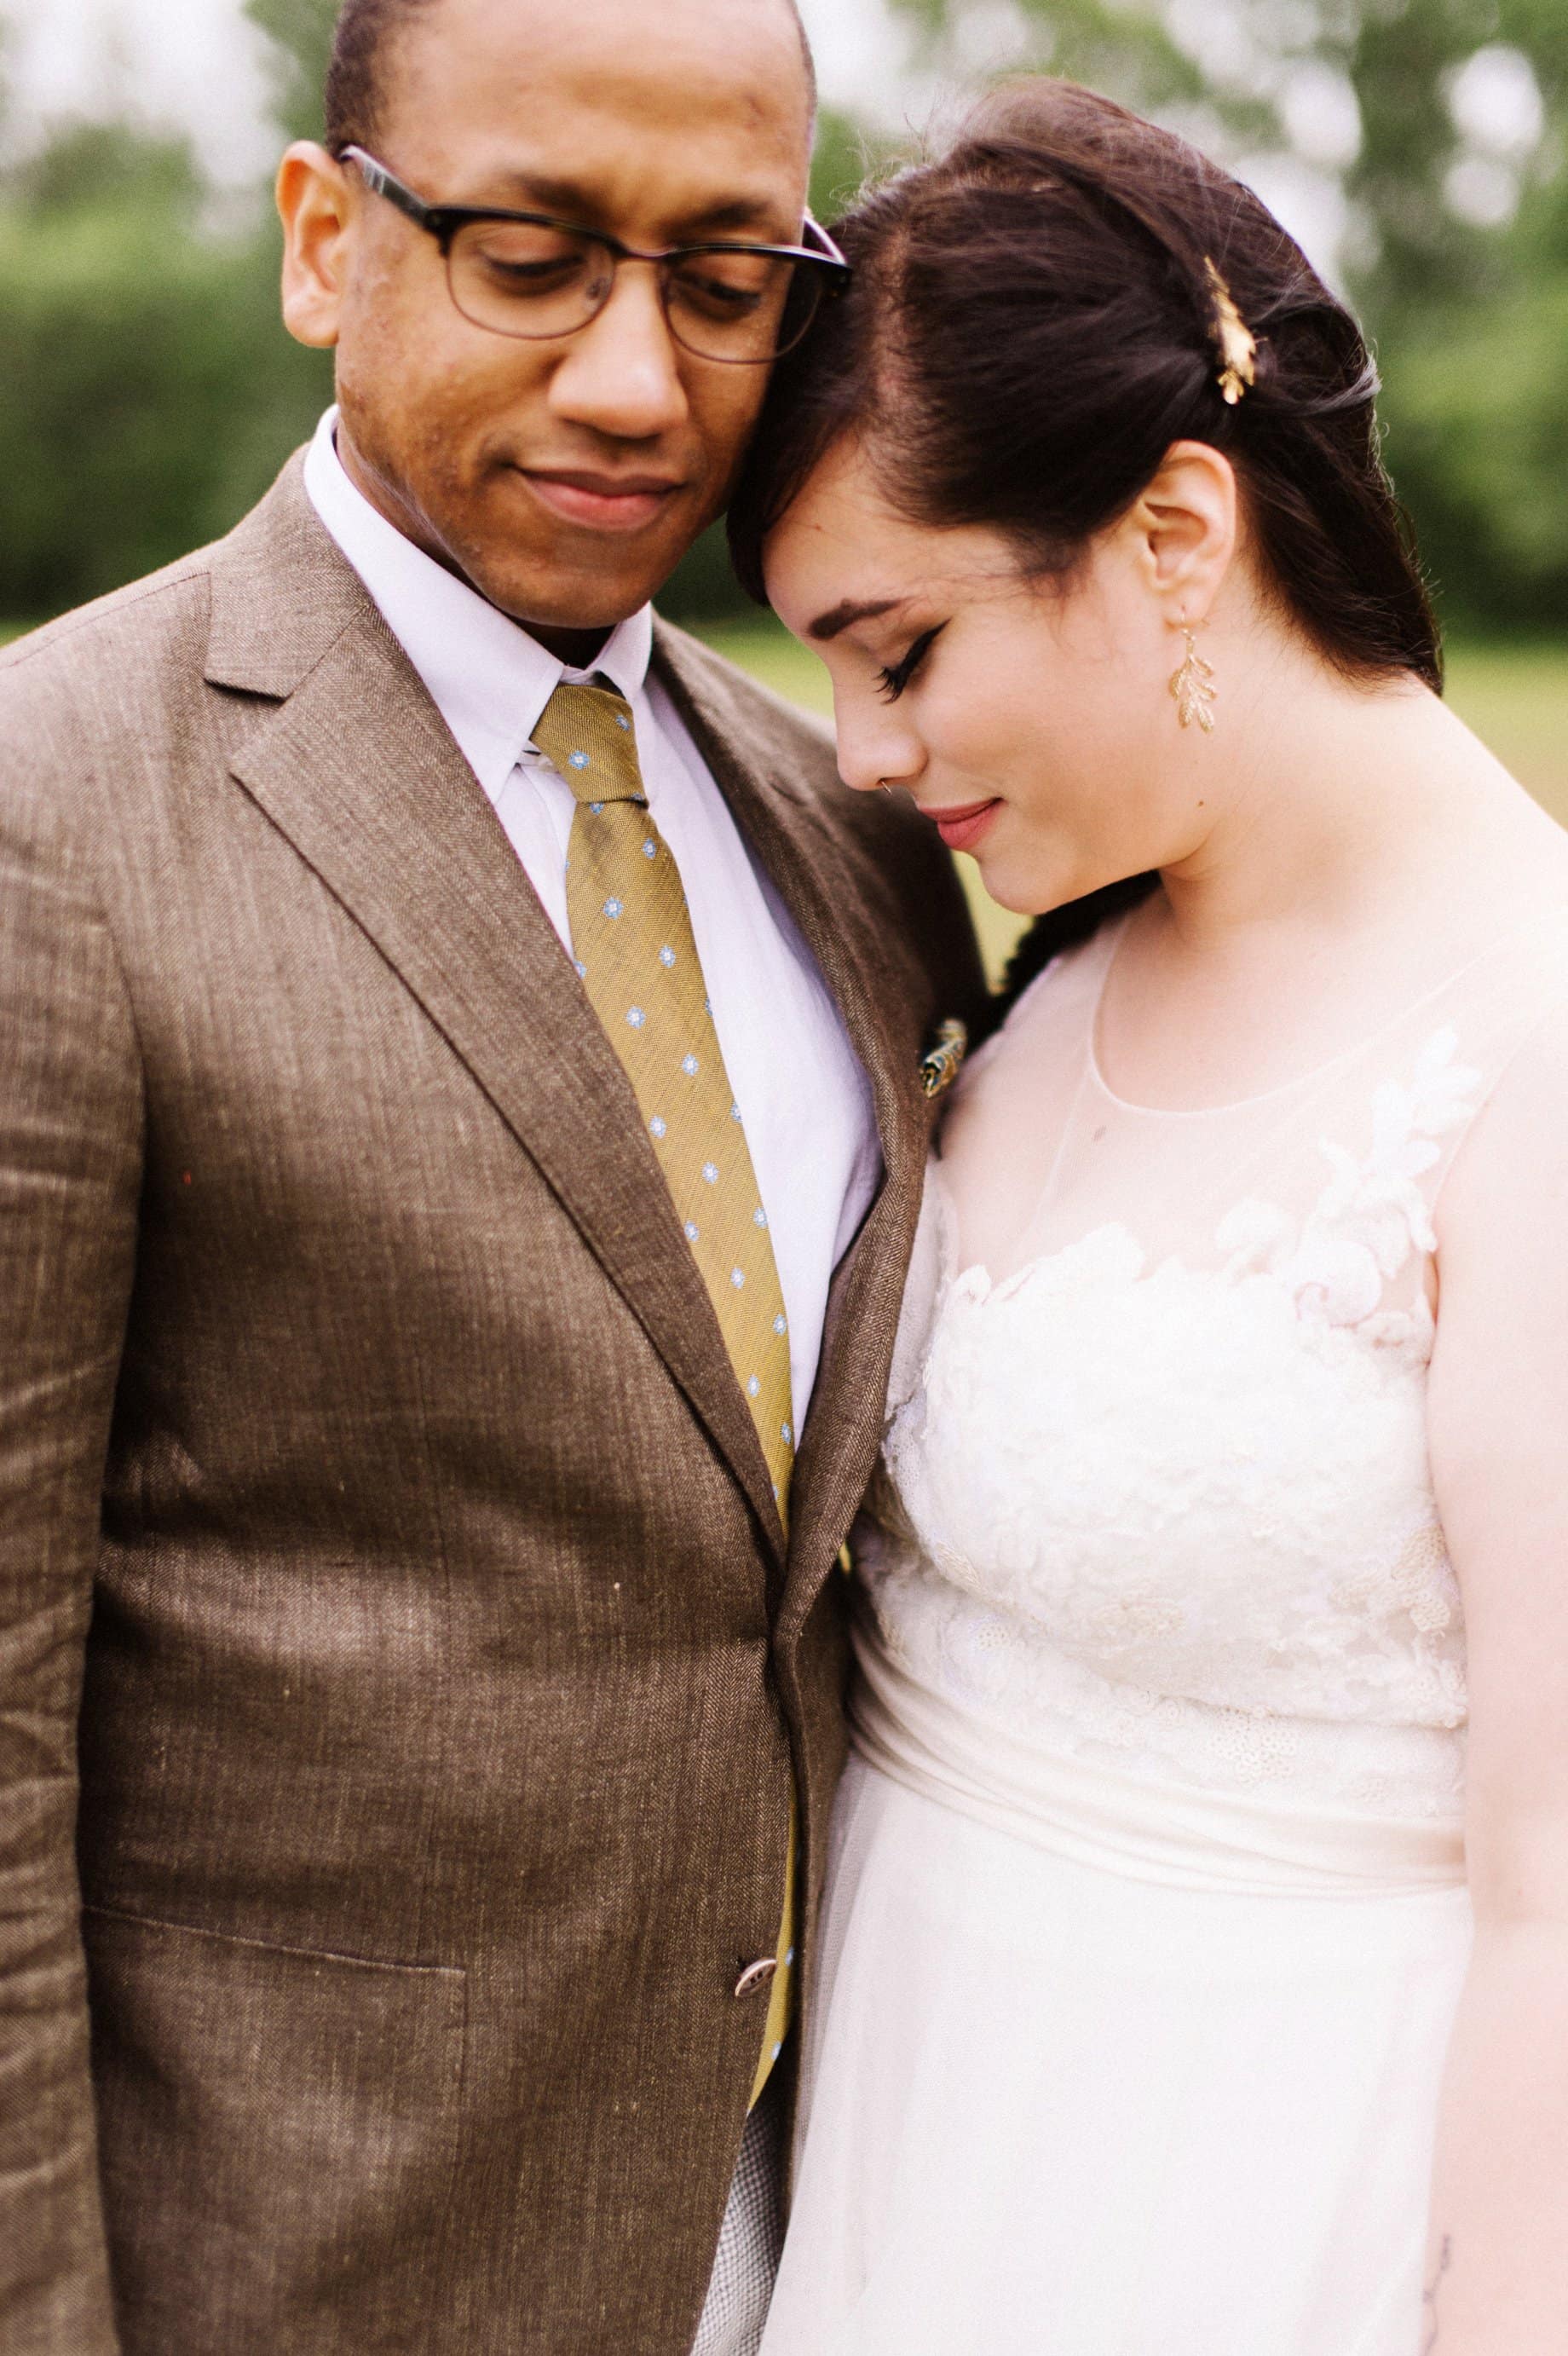 interracial bride and groom portraits